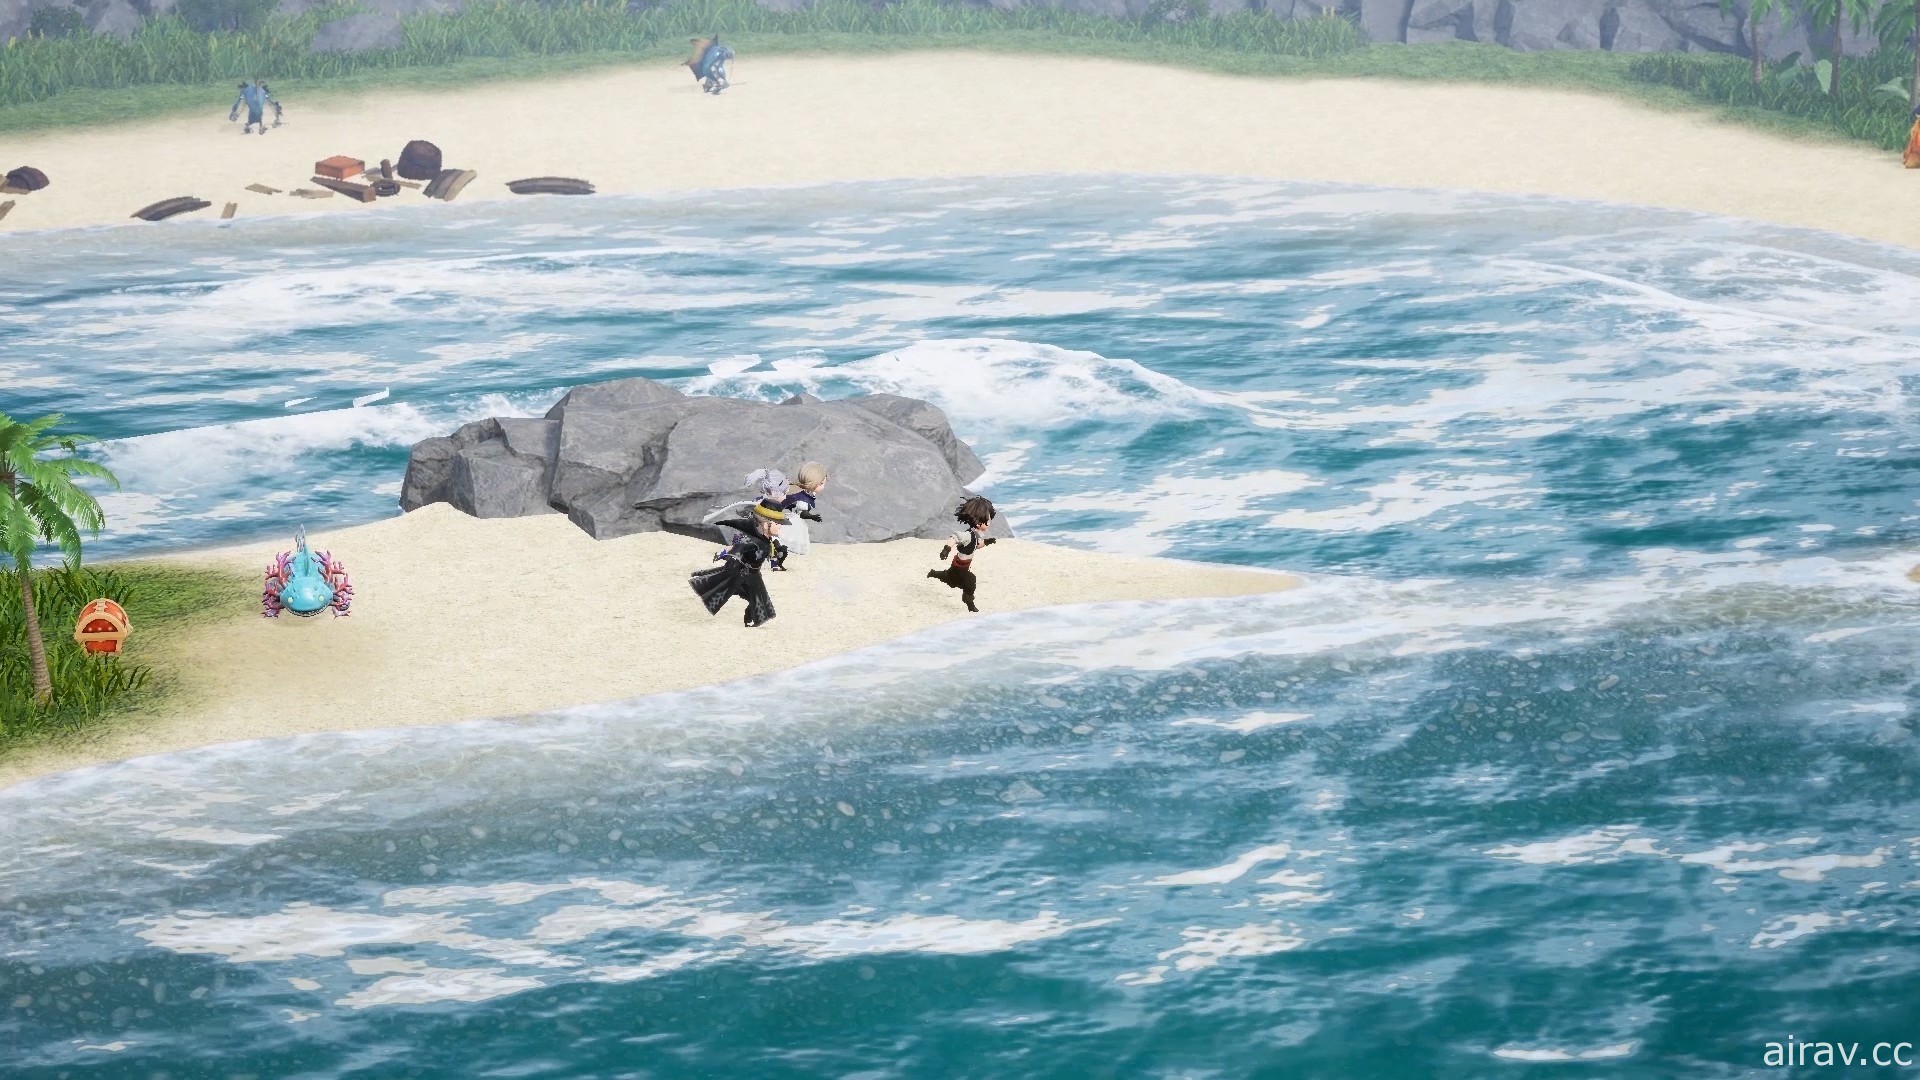 《Bravely Default II》今日正式發售 回顧世界觀與主要遊戲系統